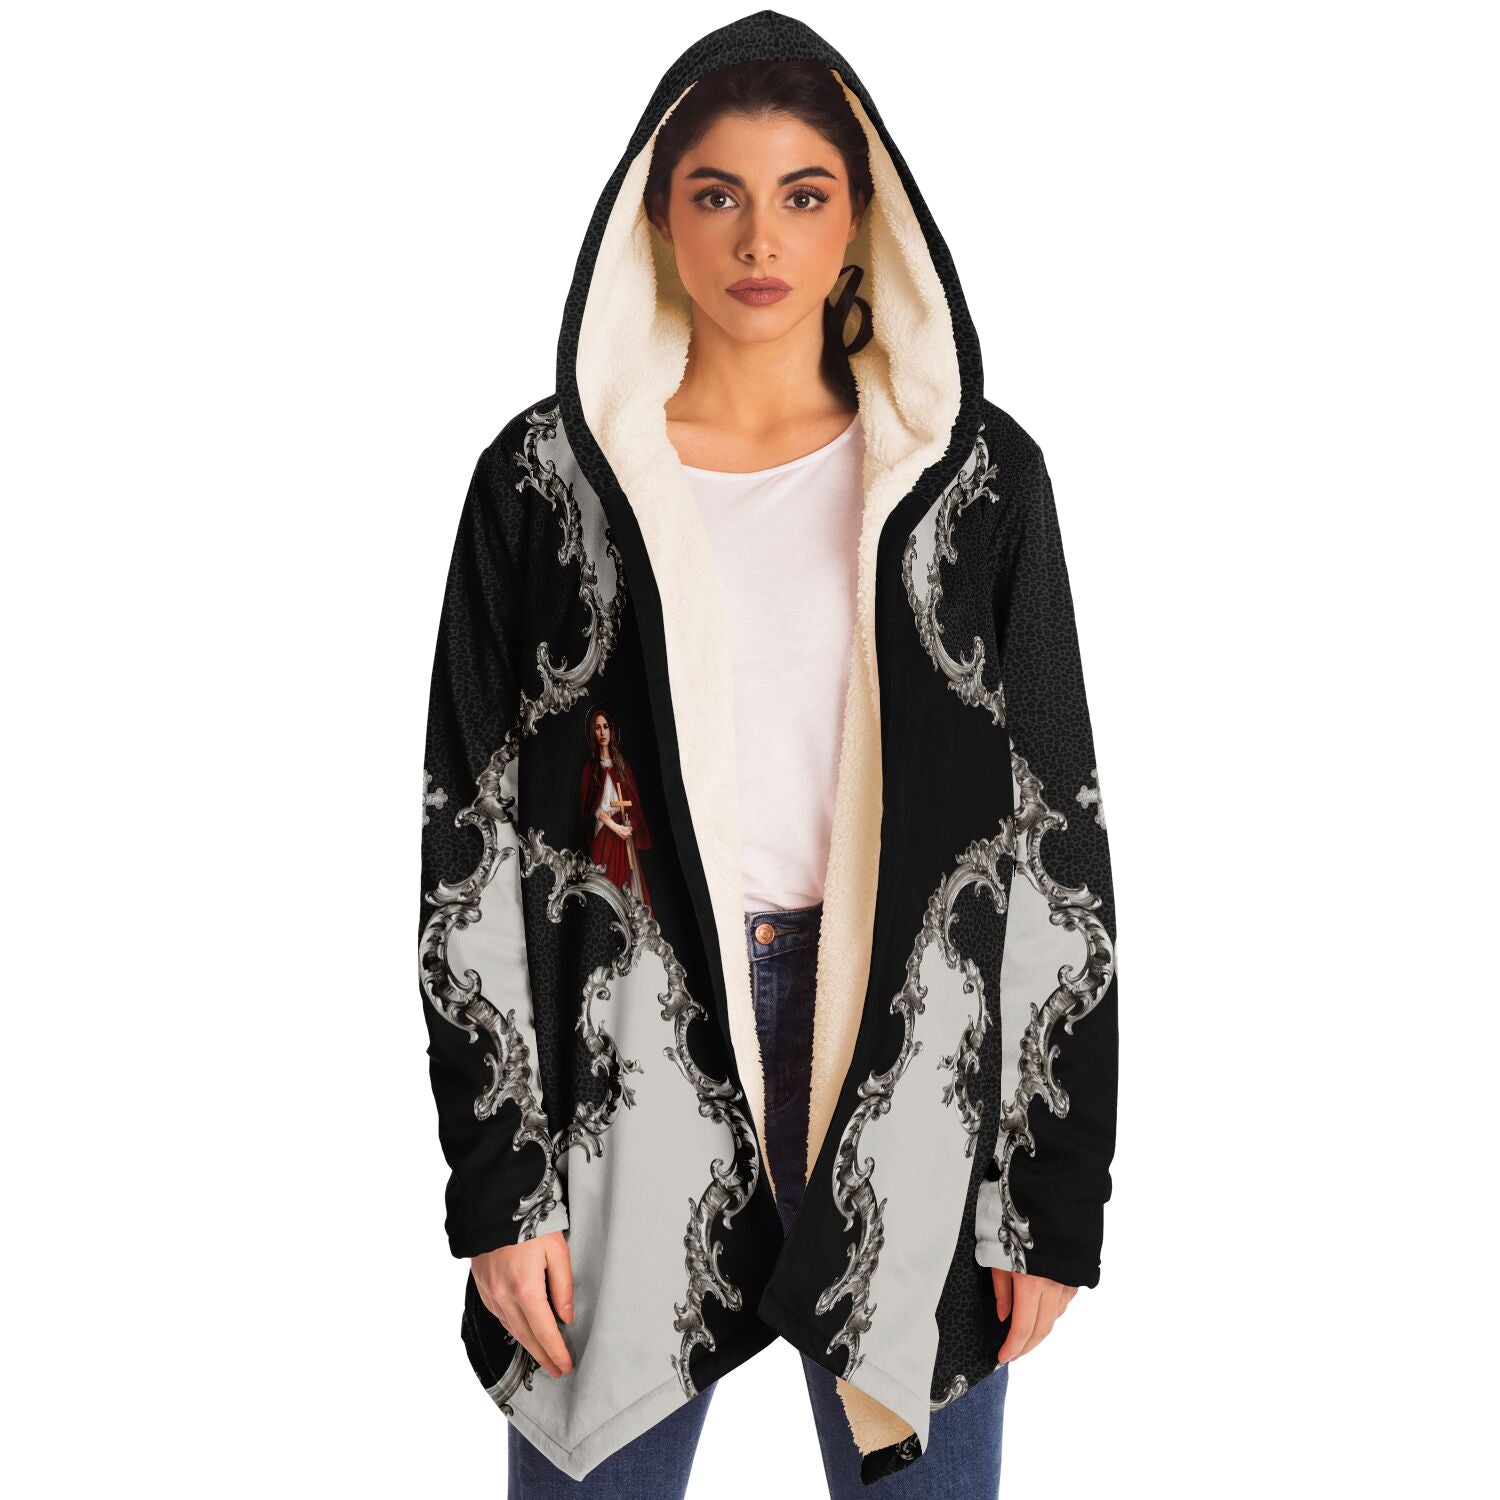 St. Mary Magdalene Microfleece Cloak (Baroque Leopard) - VENXARA®